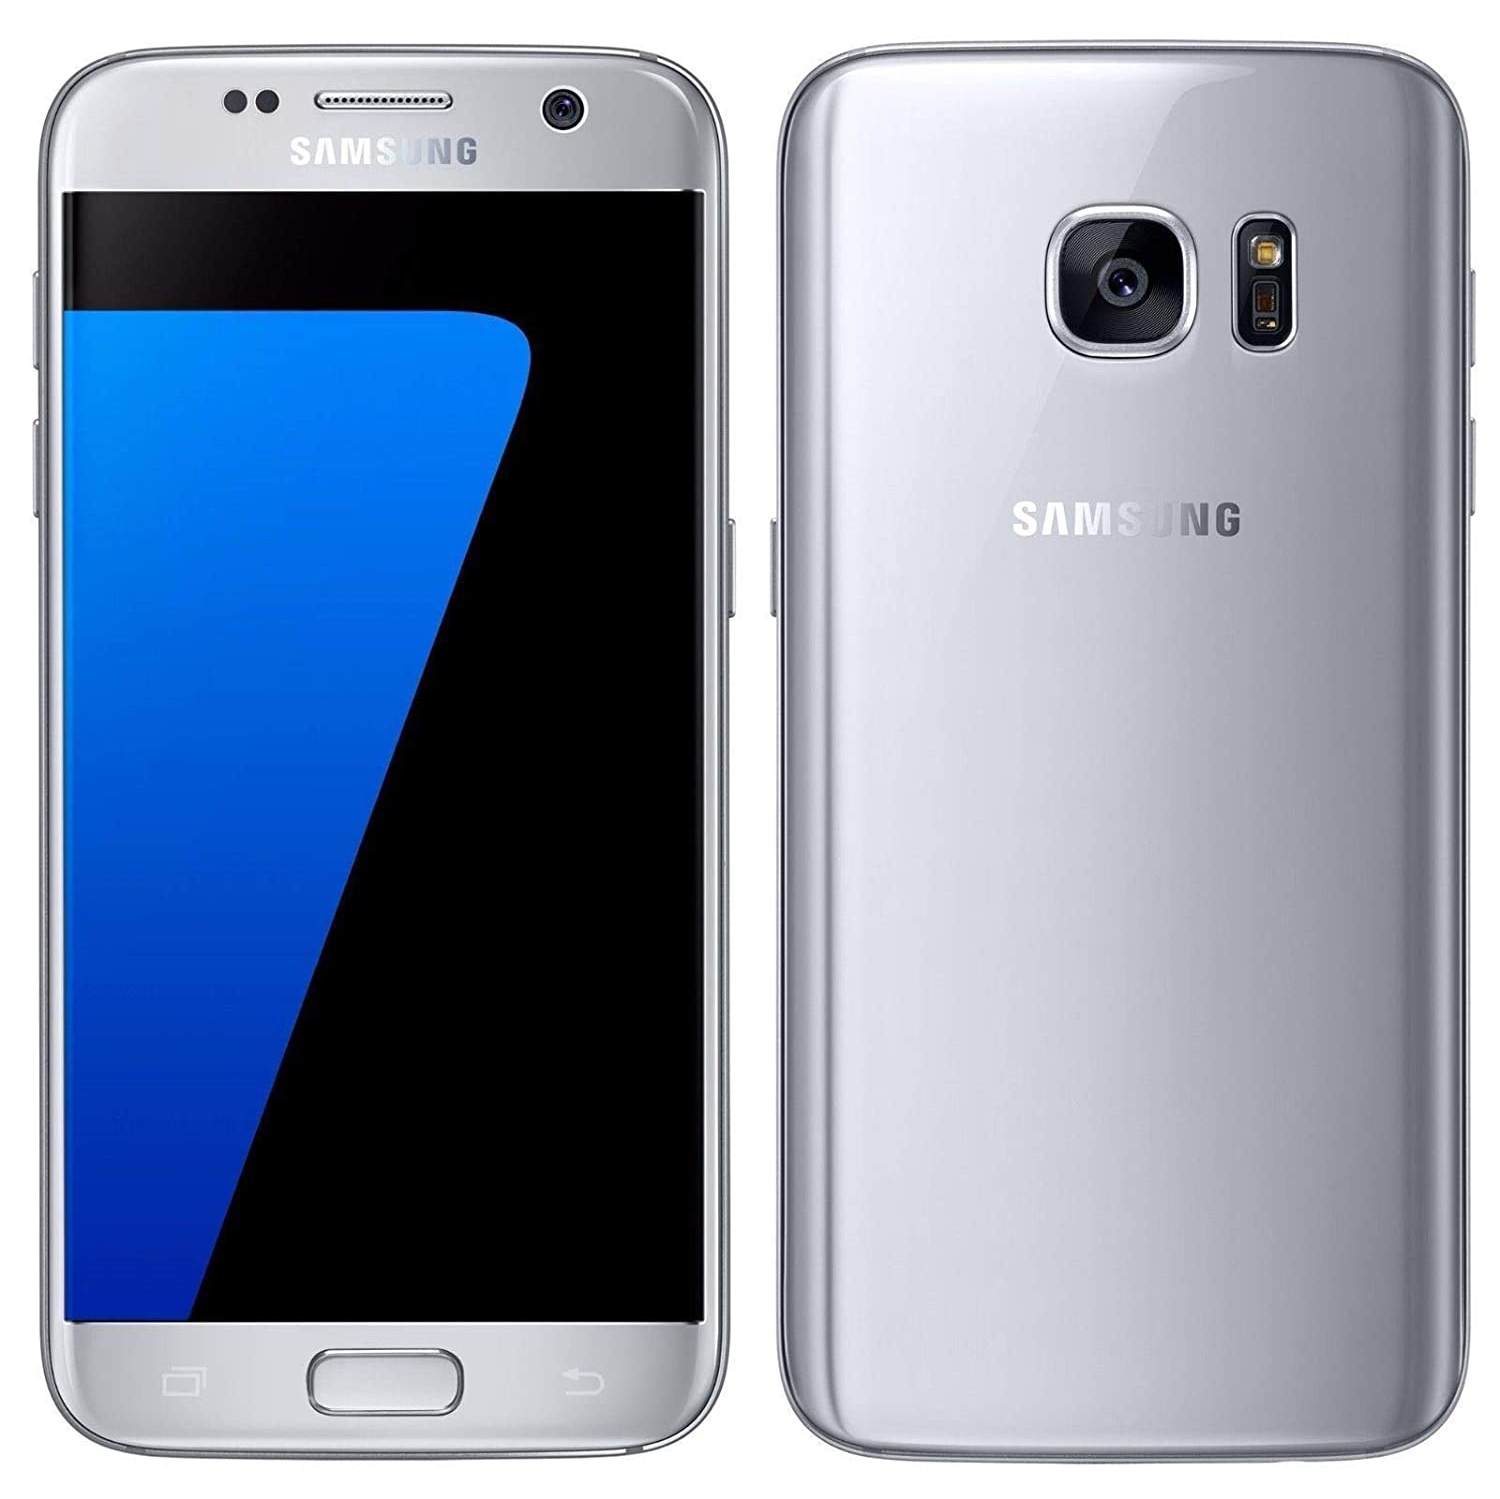 Refurbished (Excellent) - Samsung Galaxy S7 32GB Smartphone - Silver Titanium - Unlocked - Certified Refurbished